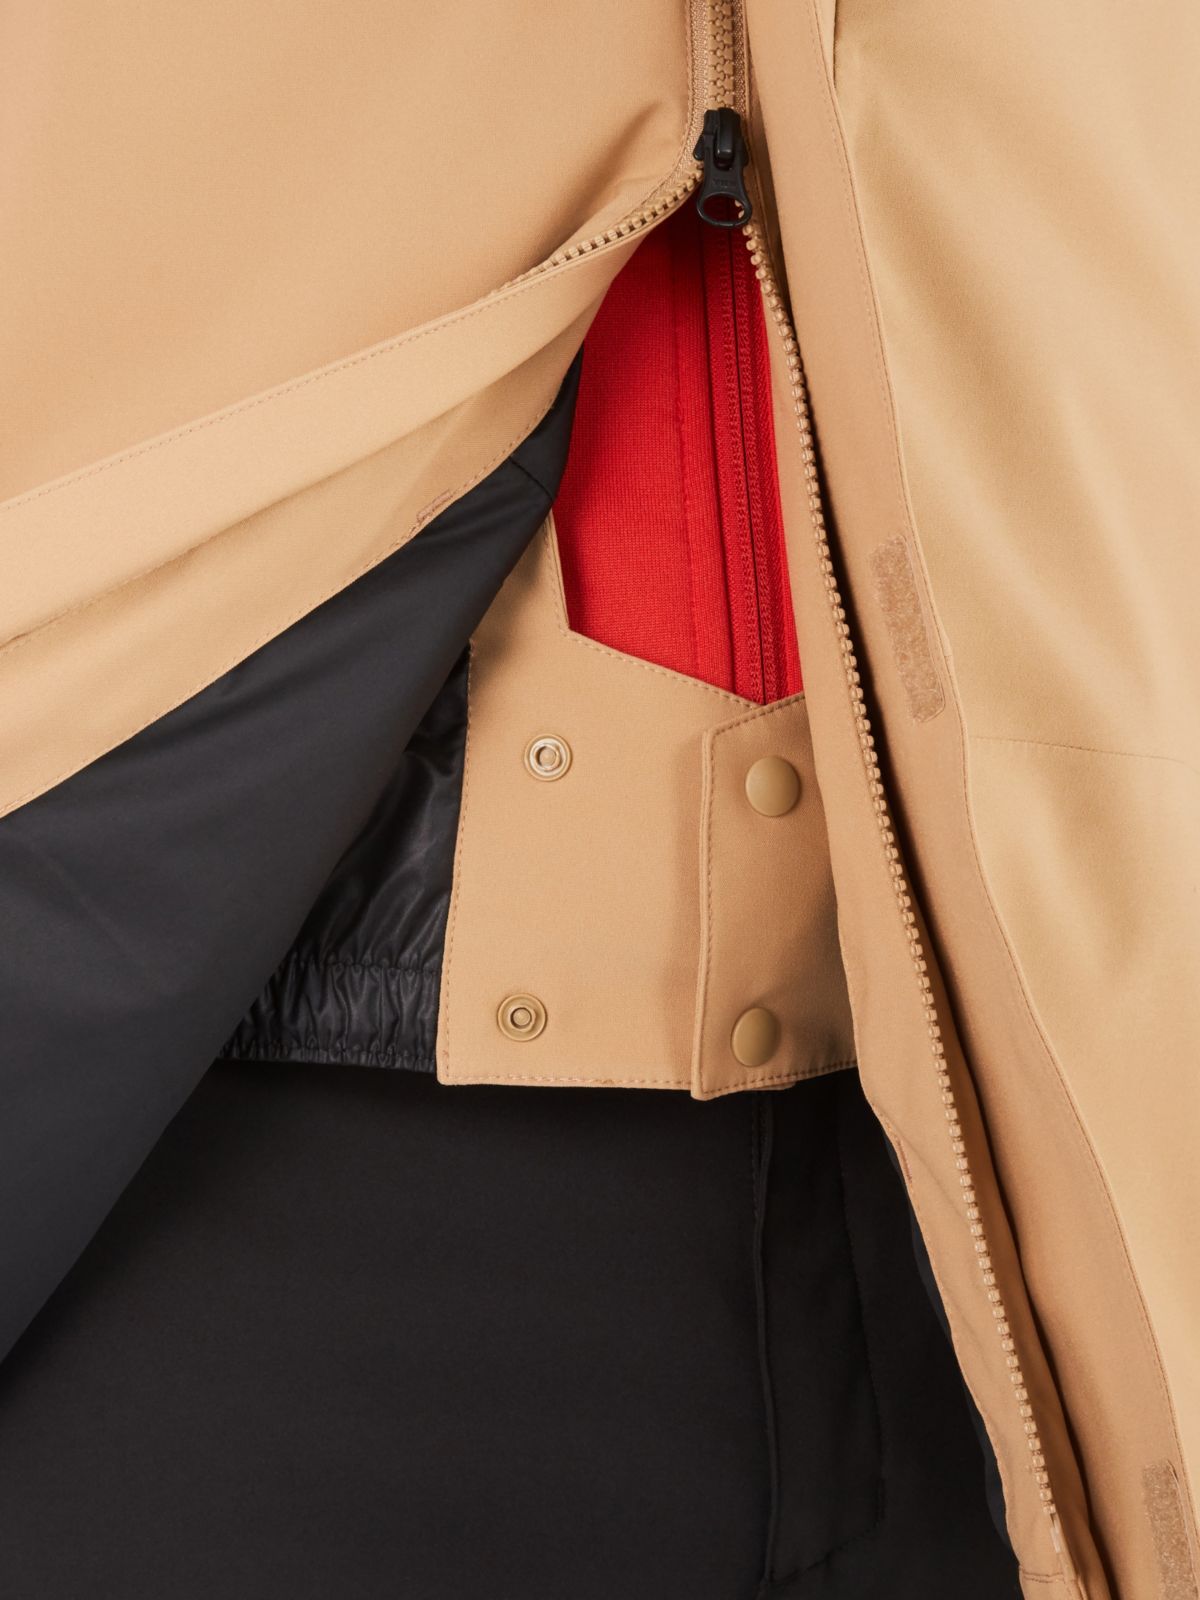 A double zipper on men's coat